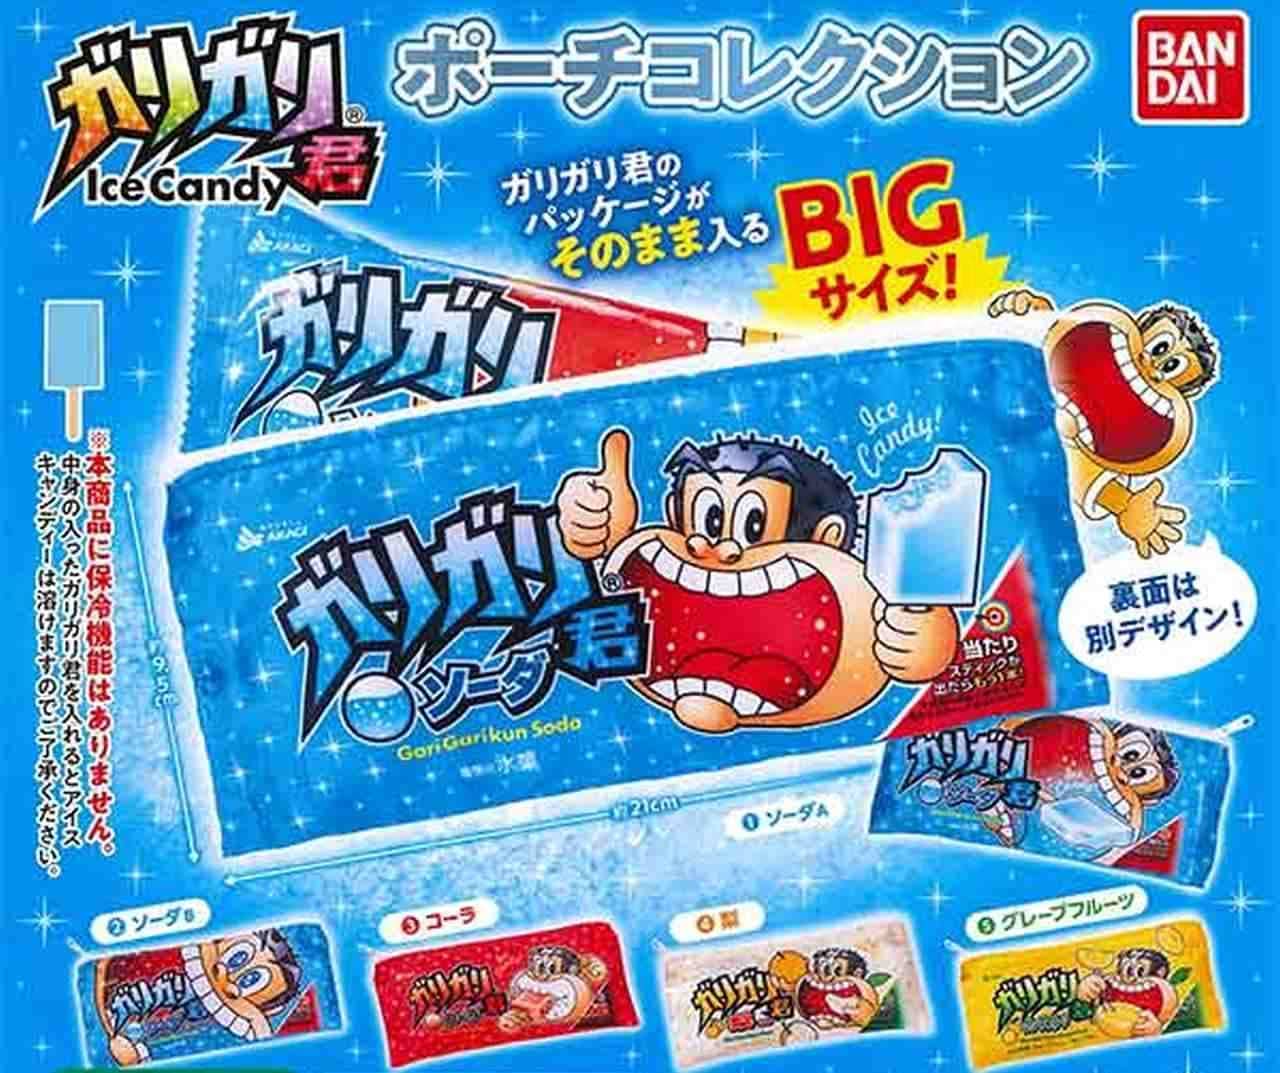 "Gari-Gari-kun Pouch Collection" Capsule Toy